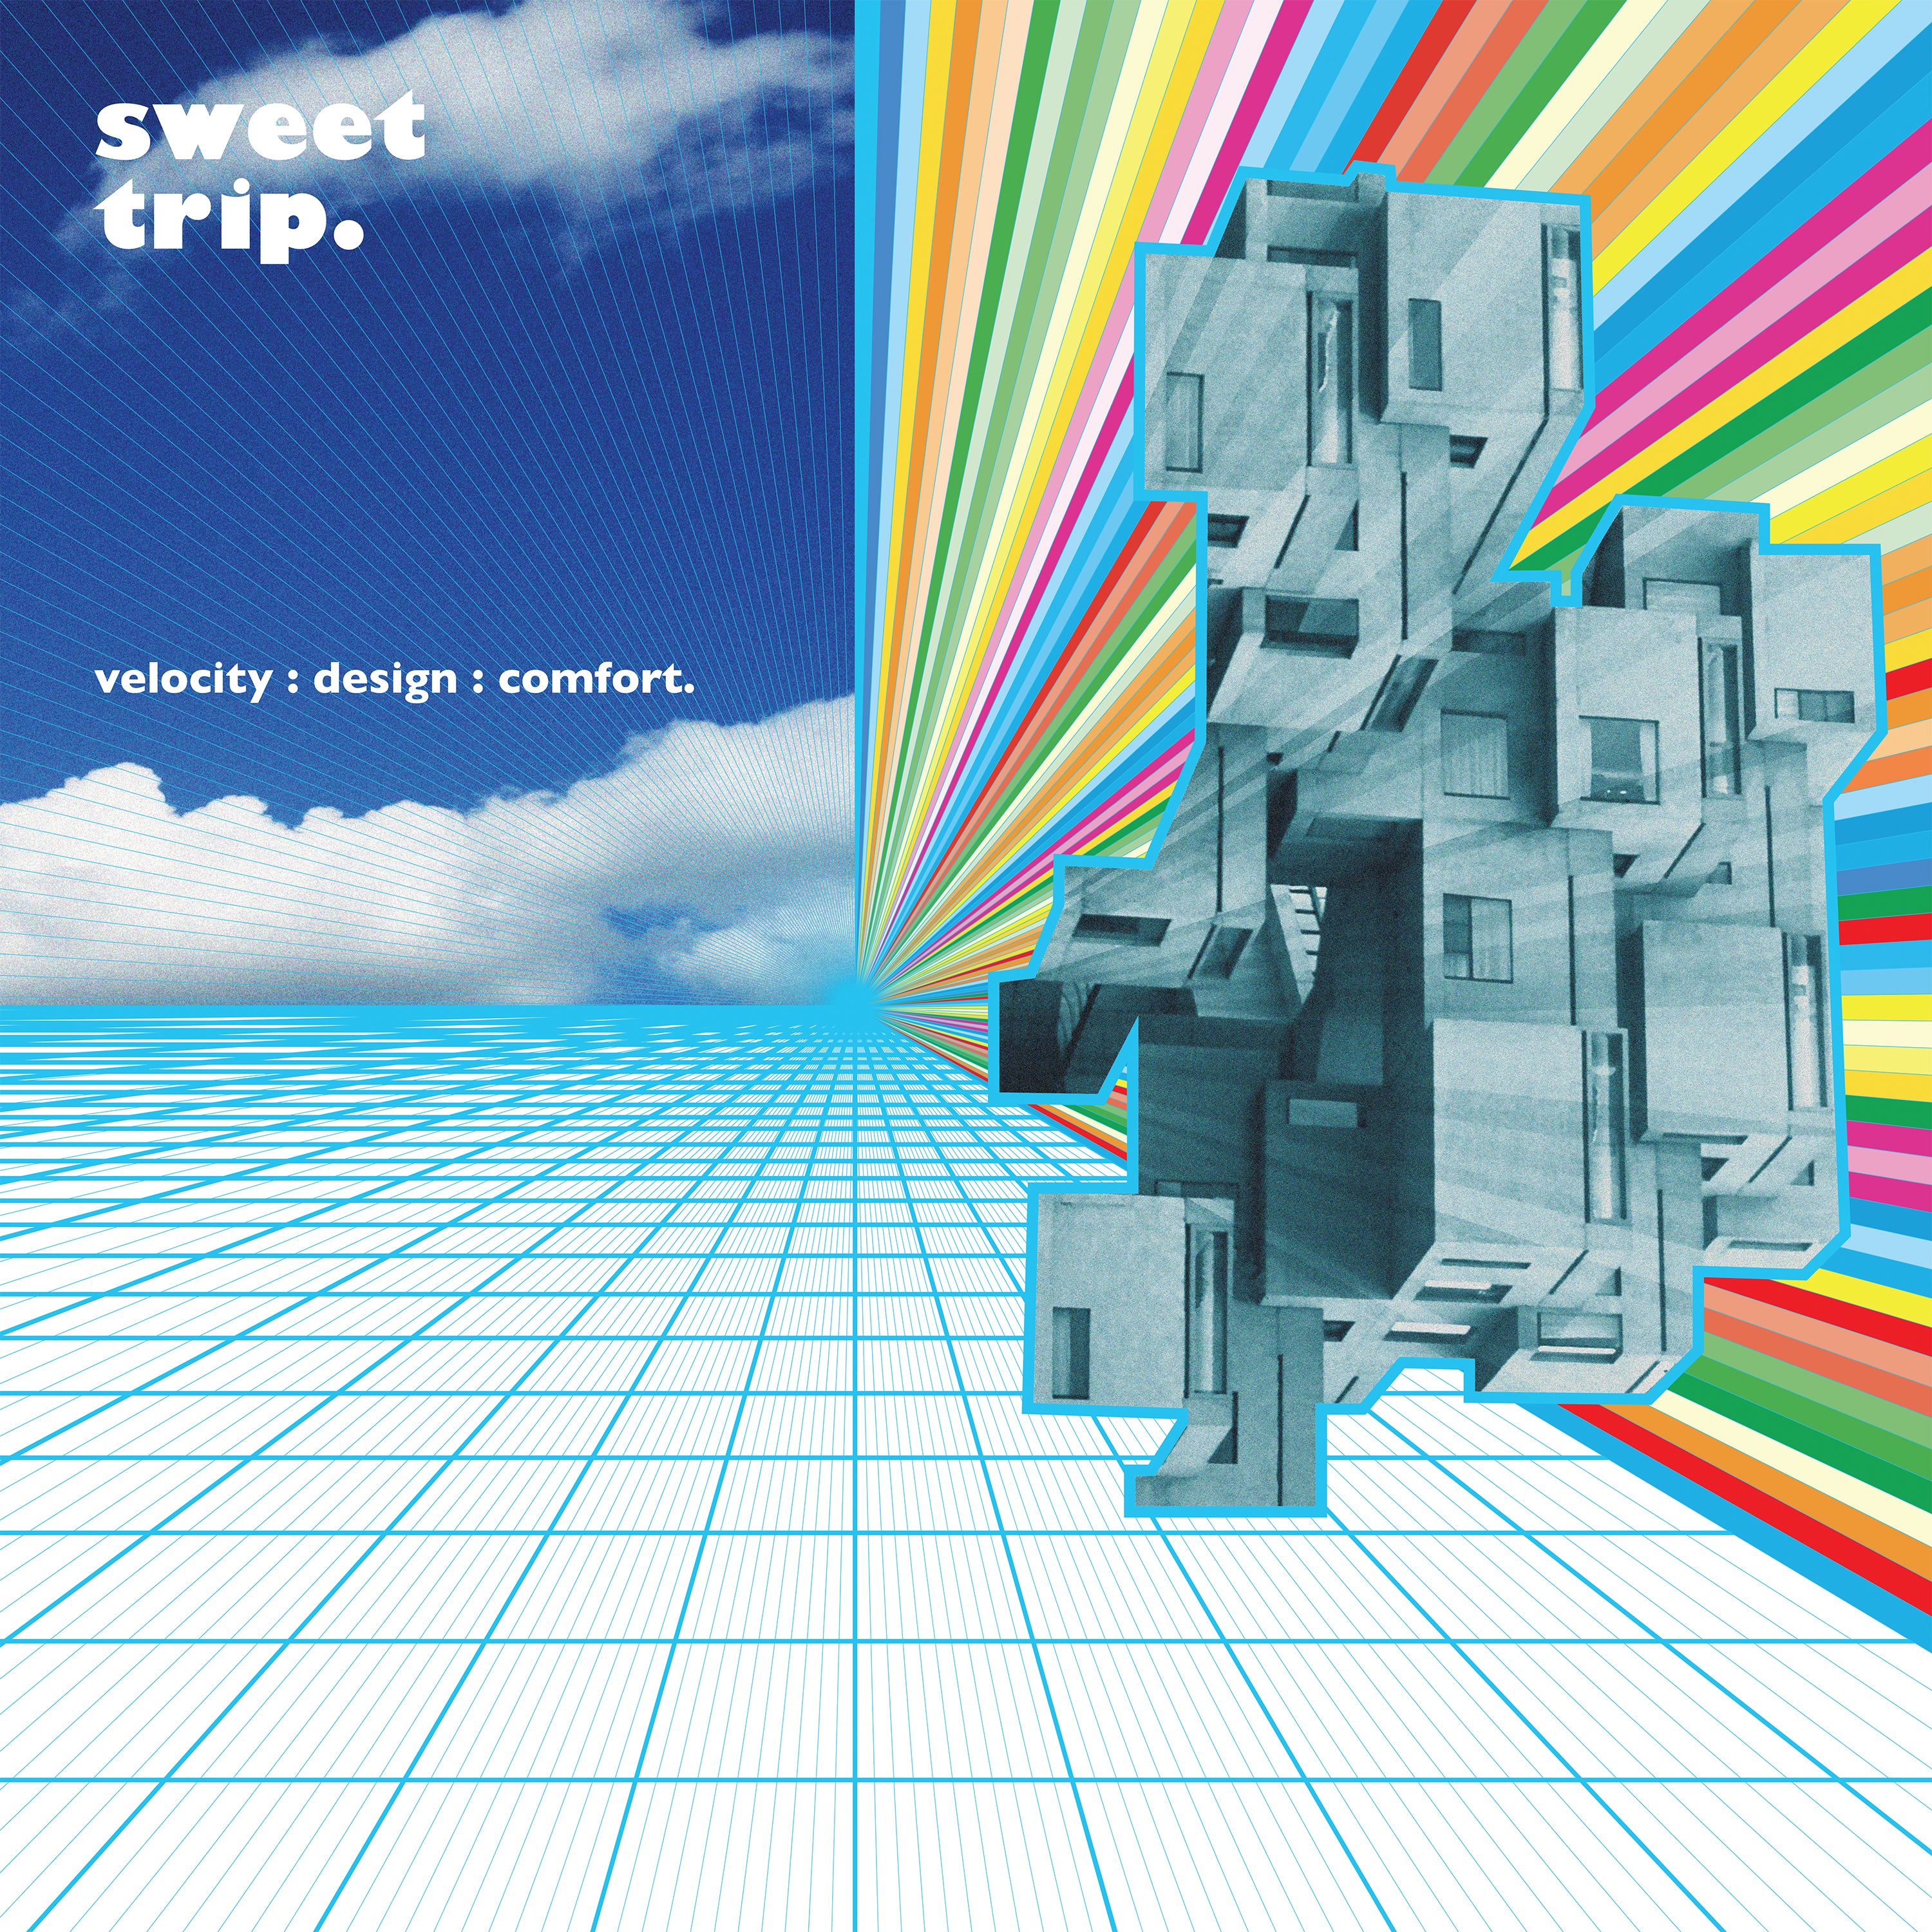 Sweet Trip - velocity: design: comfort 2xLP / CD / Digital